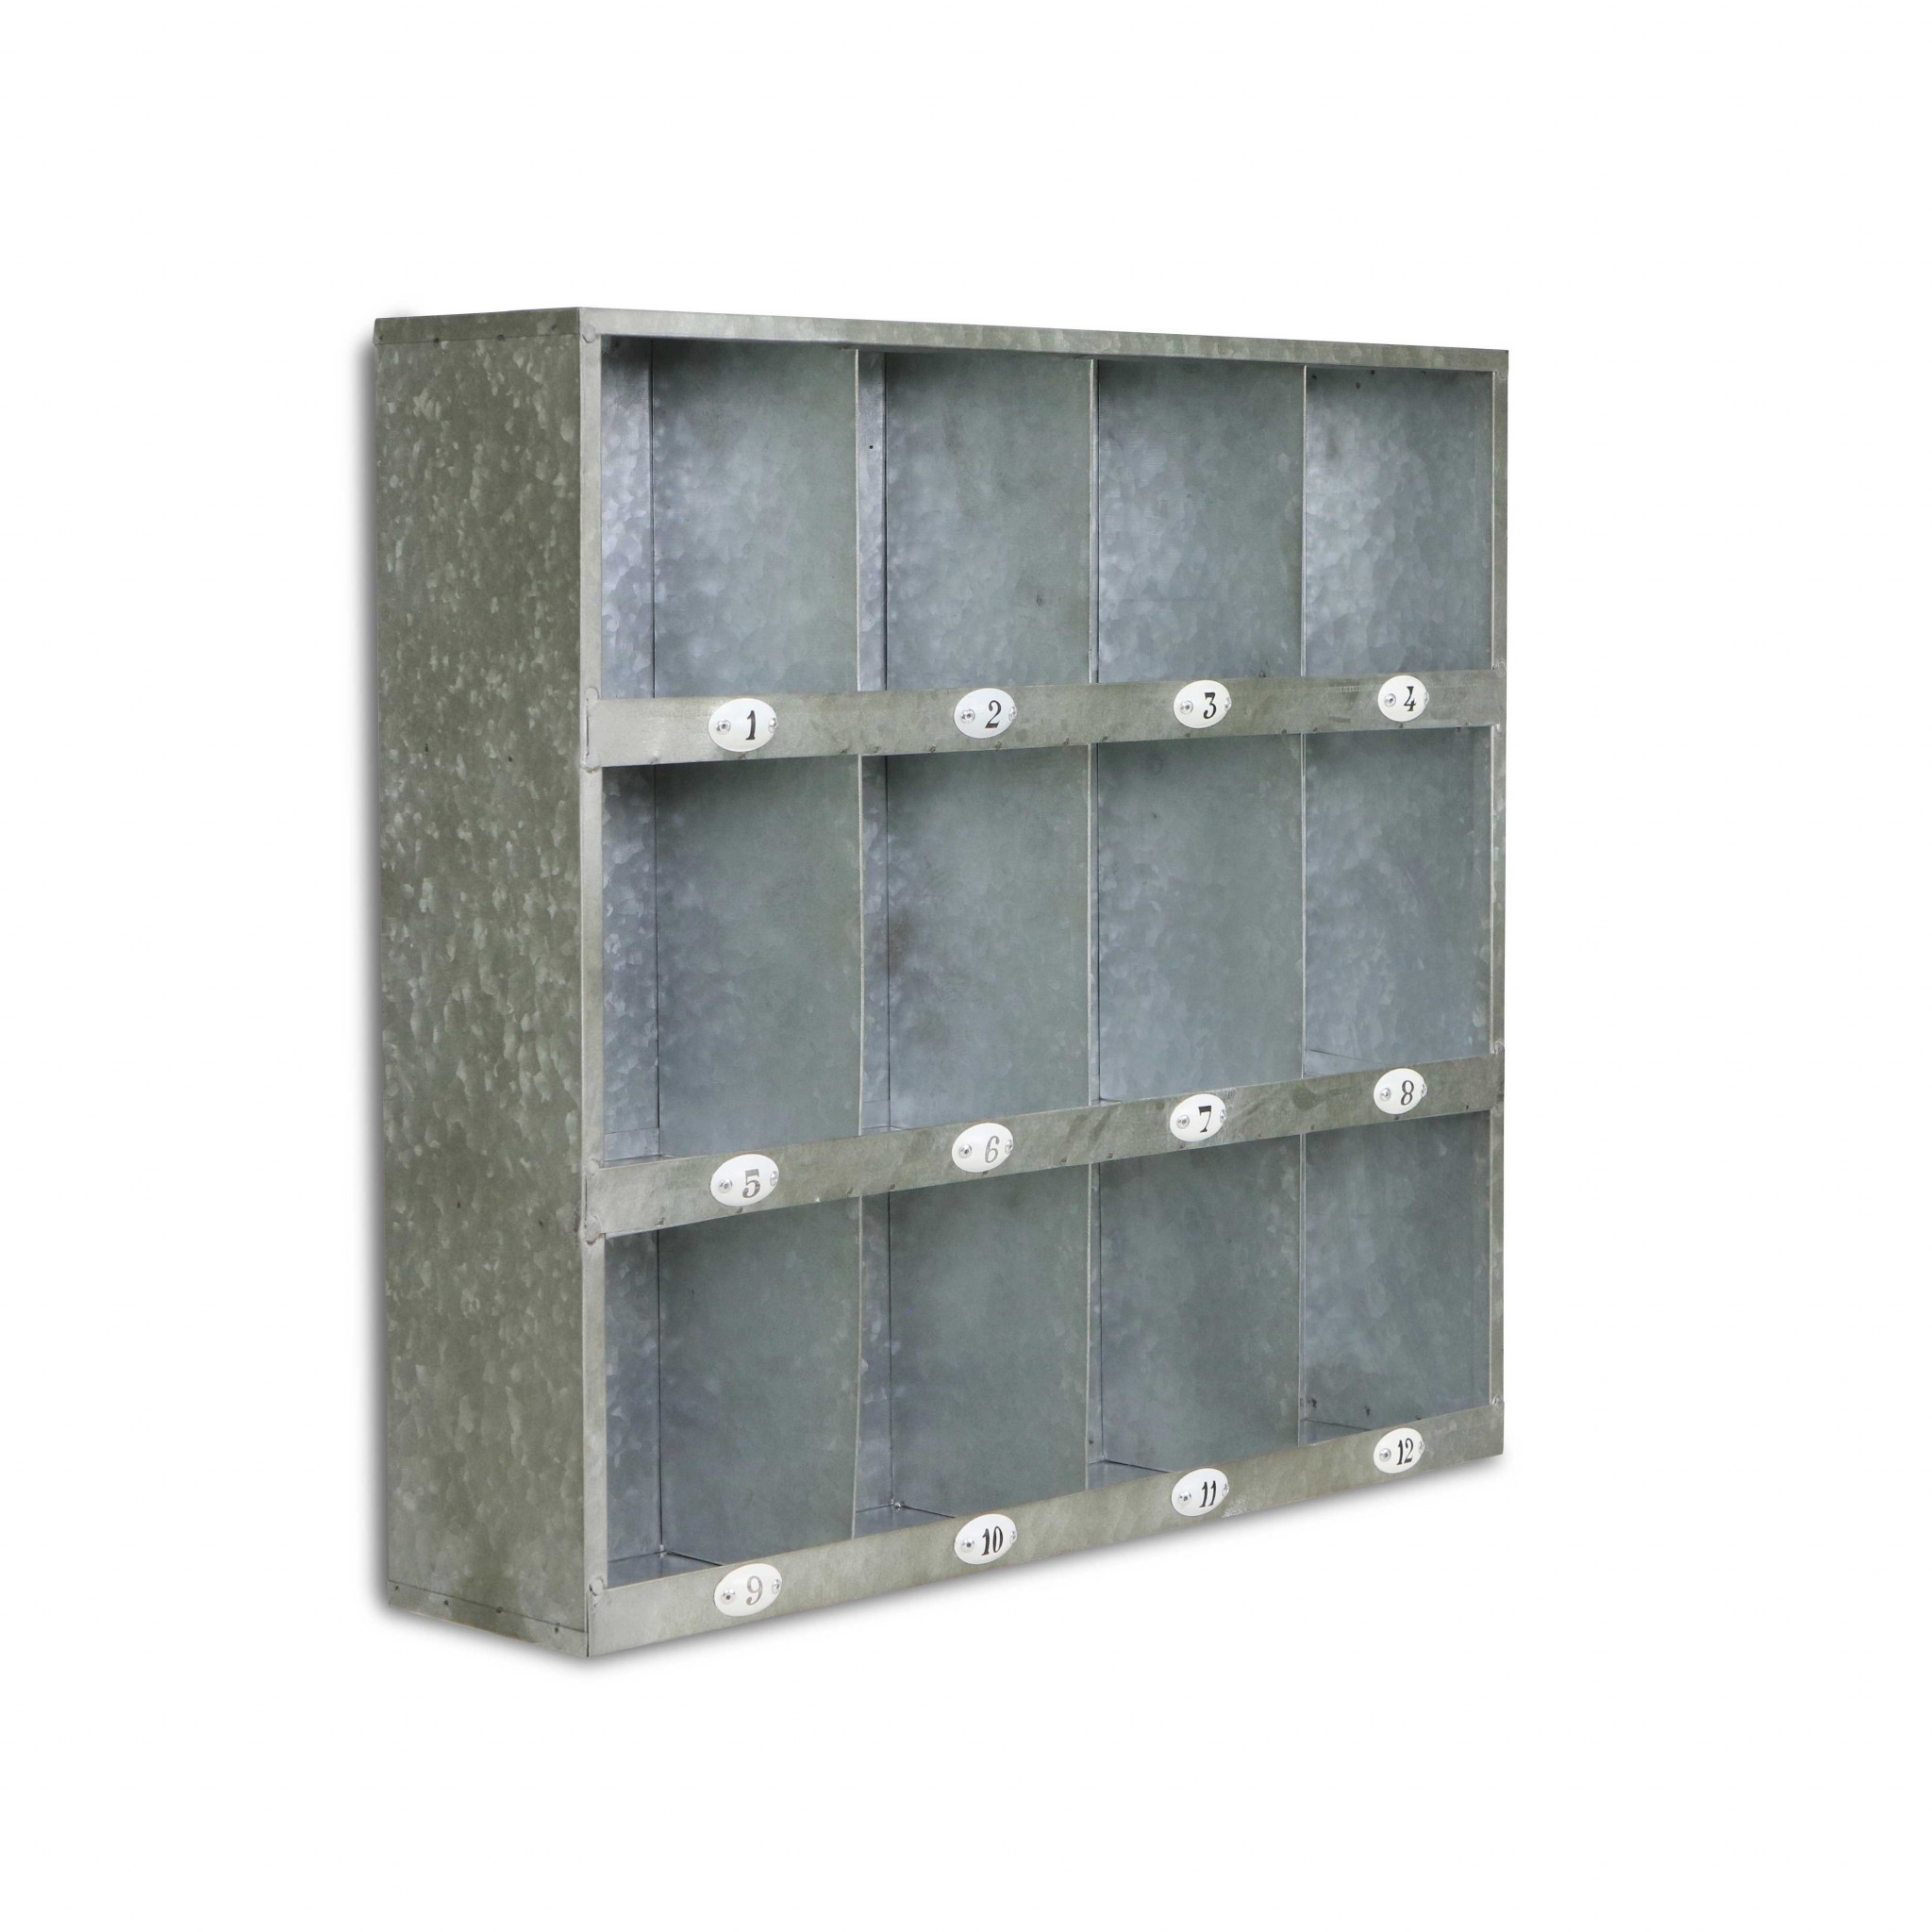 Nine Slot Galvanized Metal Open Wall Cabinet